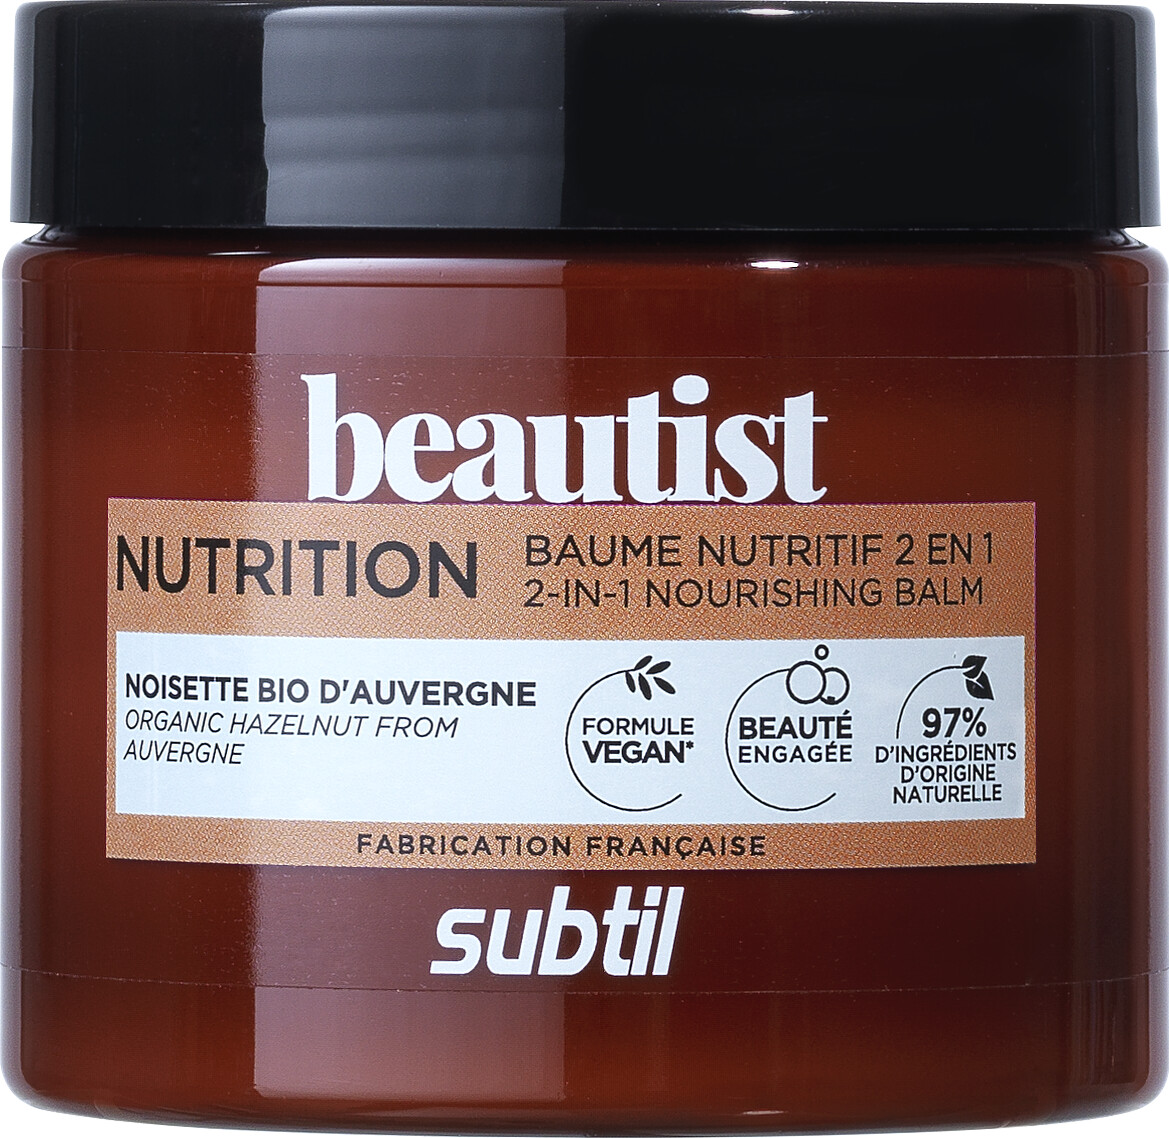 Se Subtil Beautist - 2-in-1 Nourishing Balm - Organic Hazelnut 250 Ml hos Gucca.dk